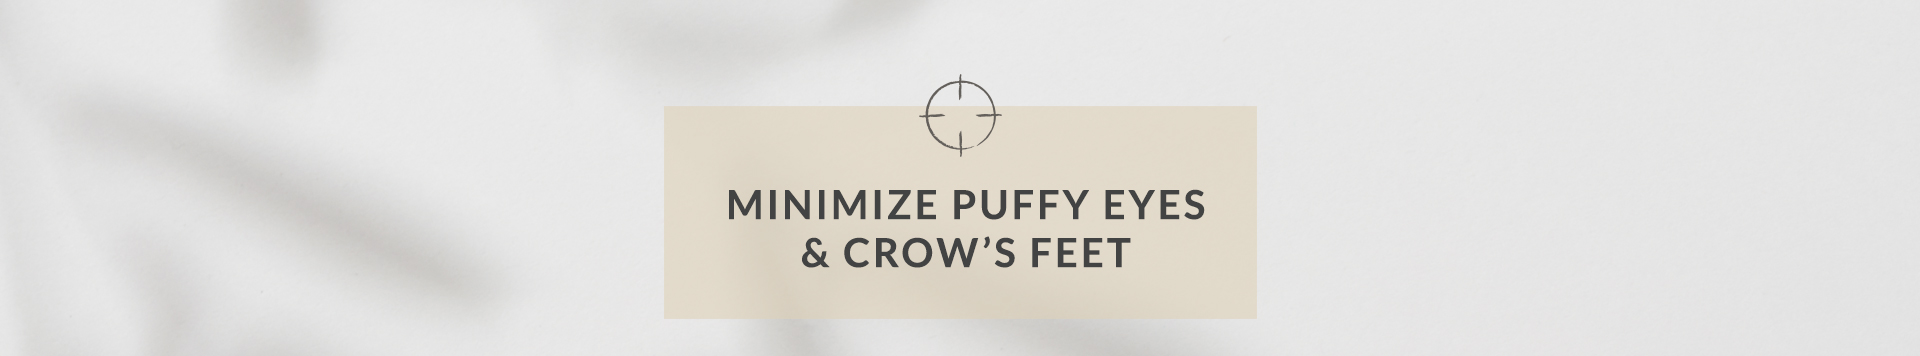 Minimize Puffy Eyes & Crow's Feet